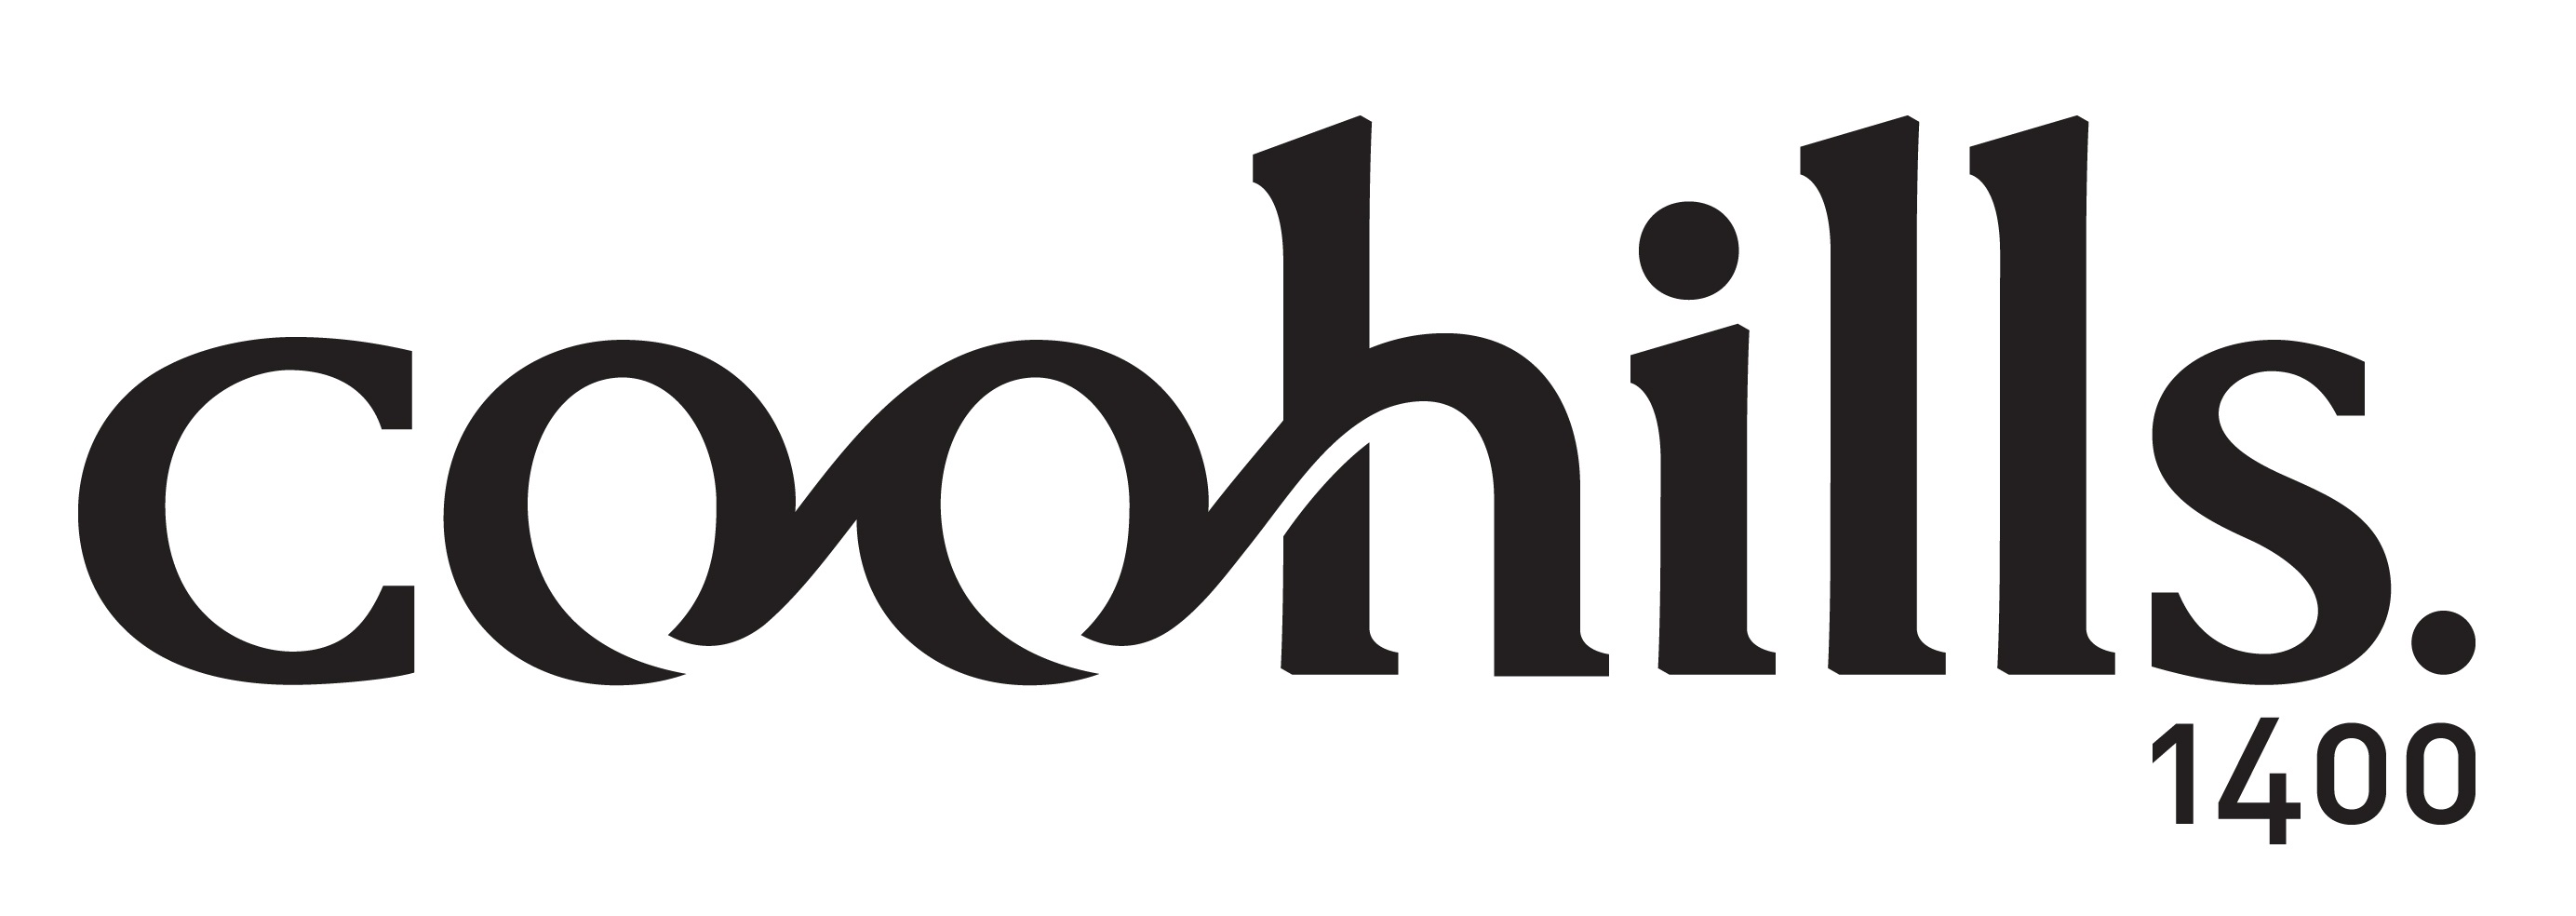 Coohills logo